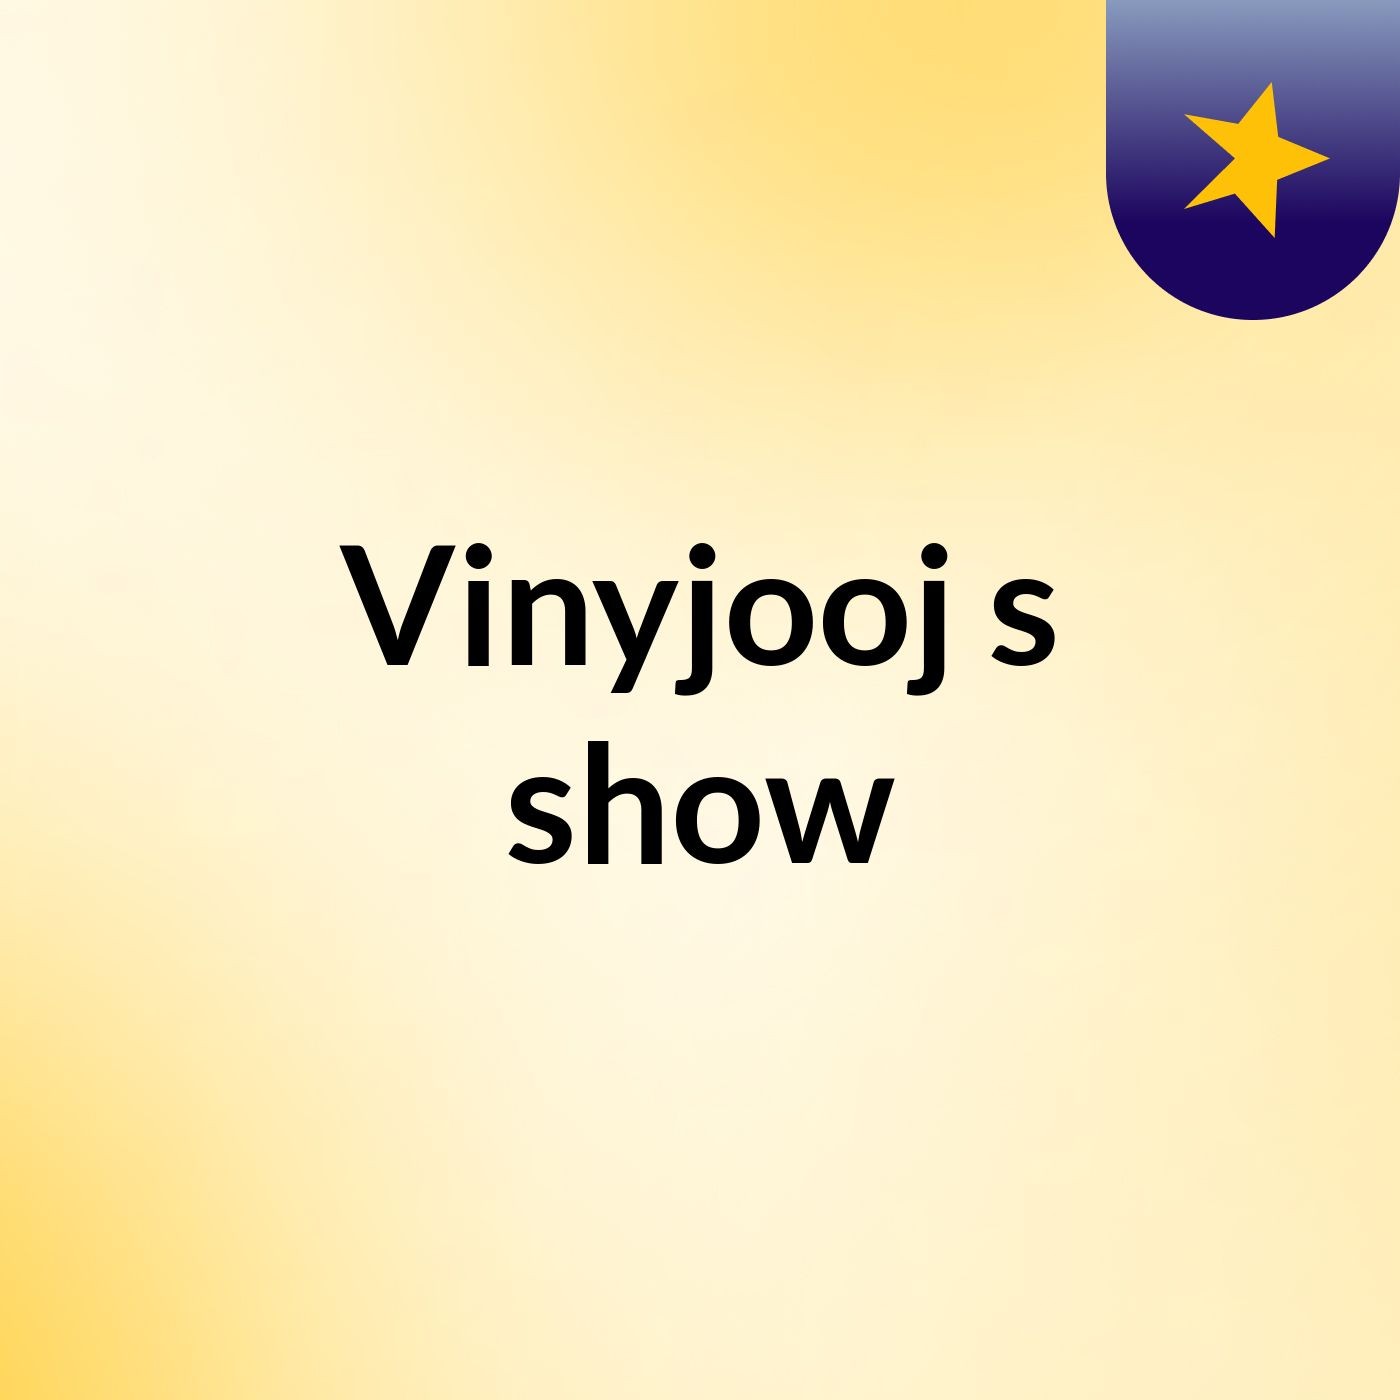 Vinyjooj's show